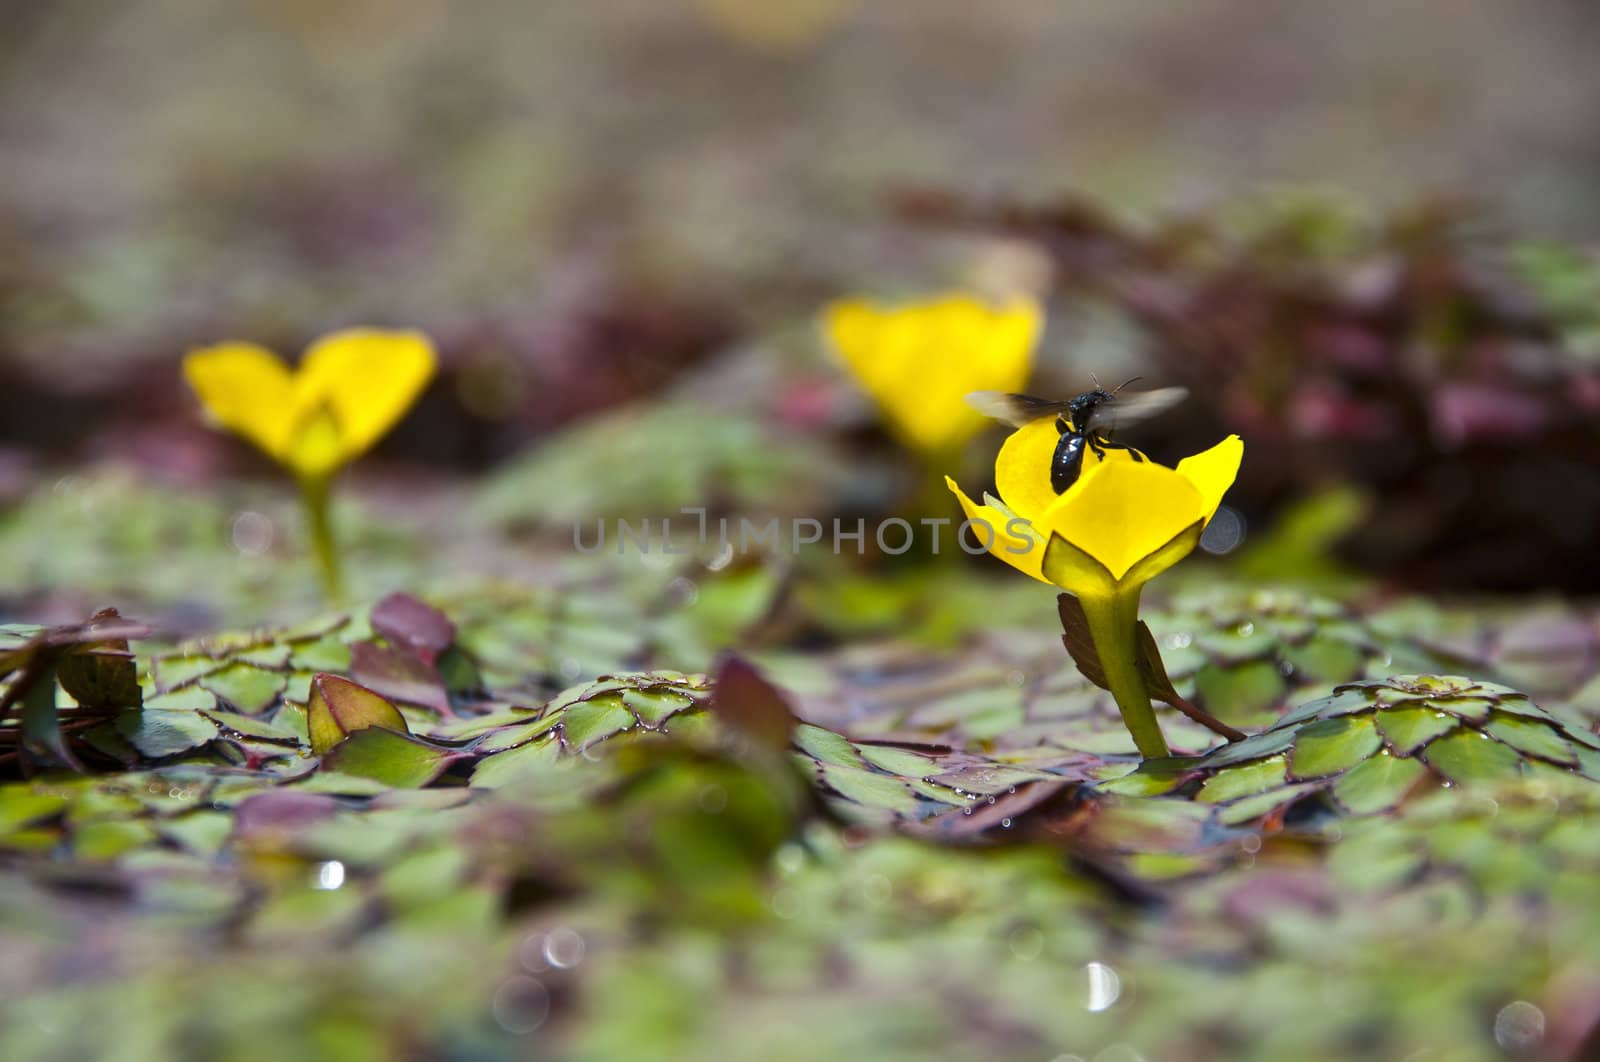 tiny yellow lotus flower